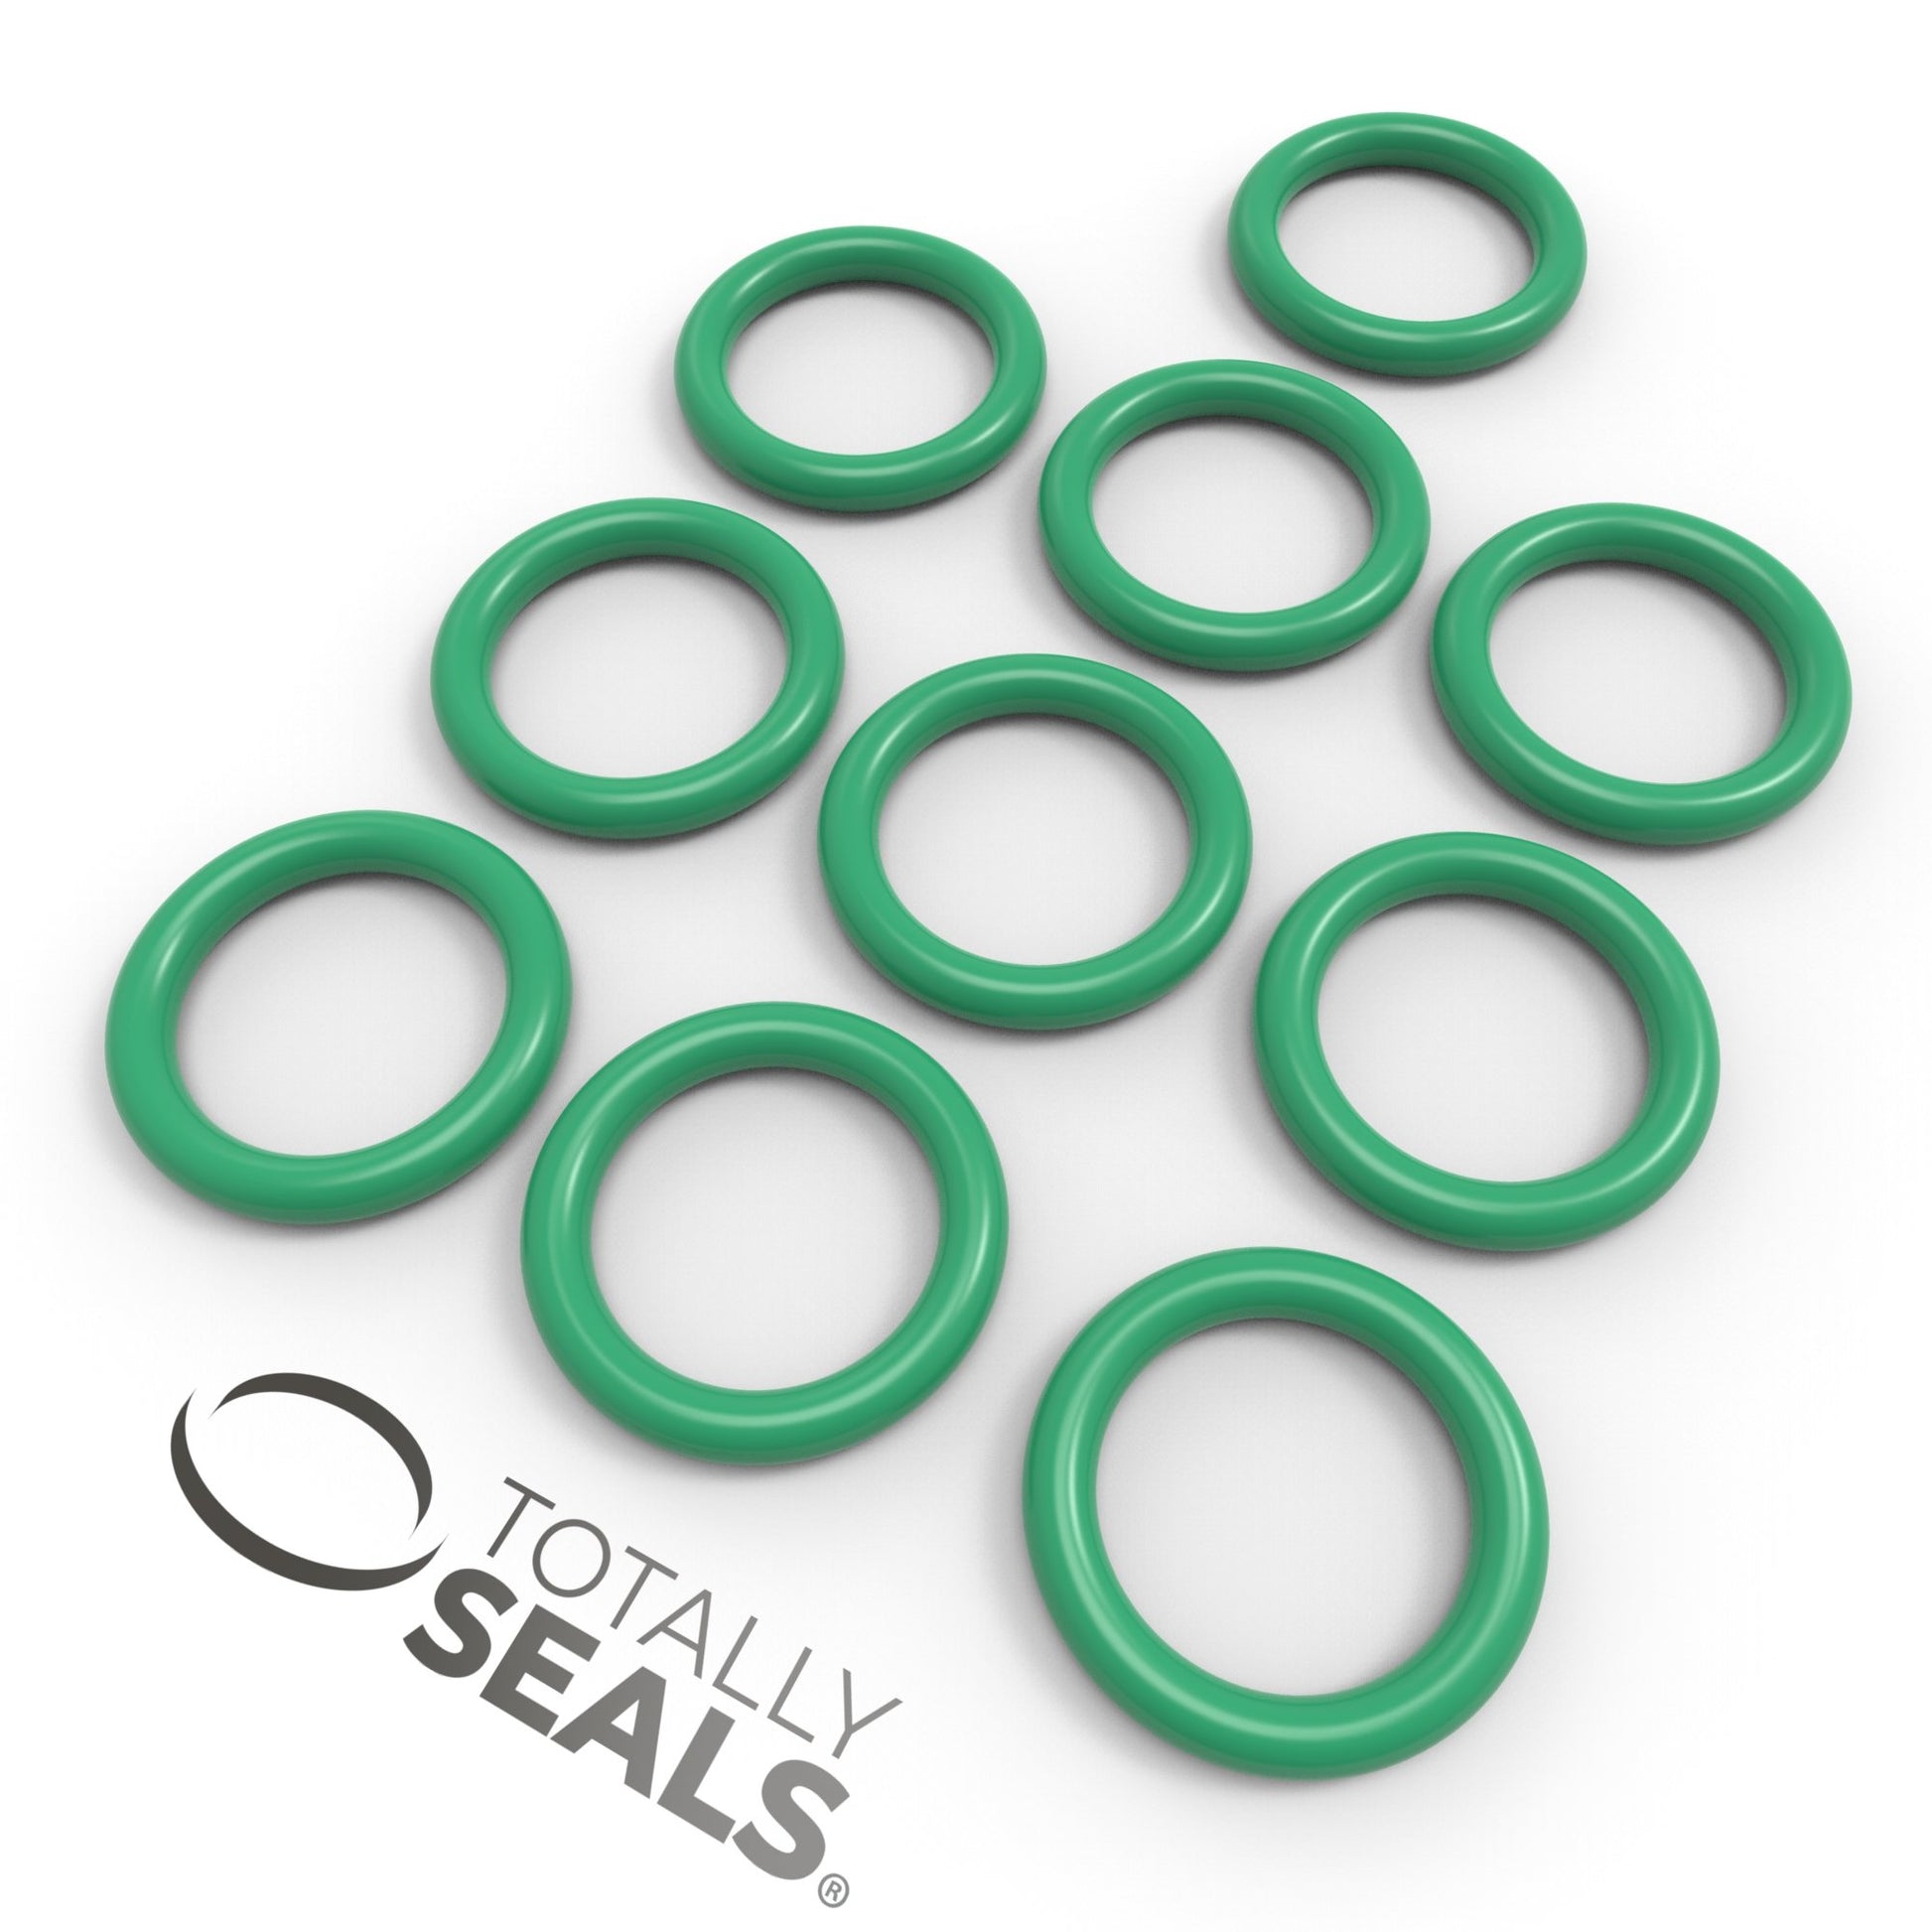 6mm x 3mm (12mm OD) FKM (Viton™) O-Rings - Totally Seals®